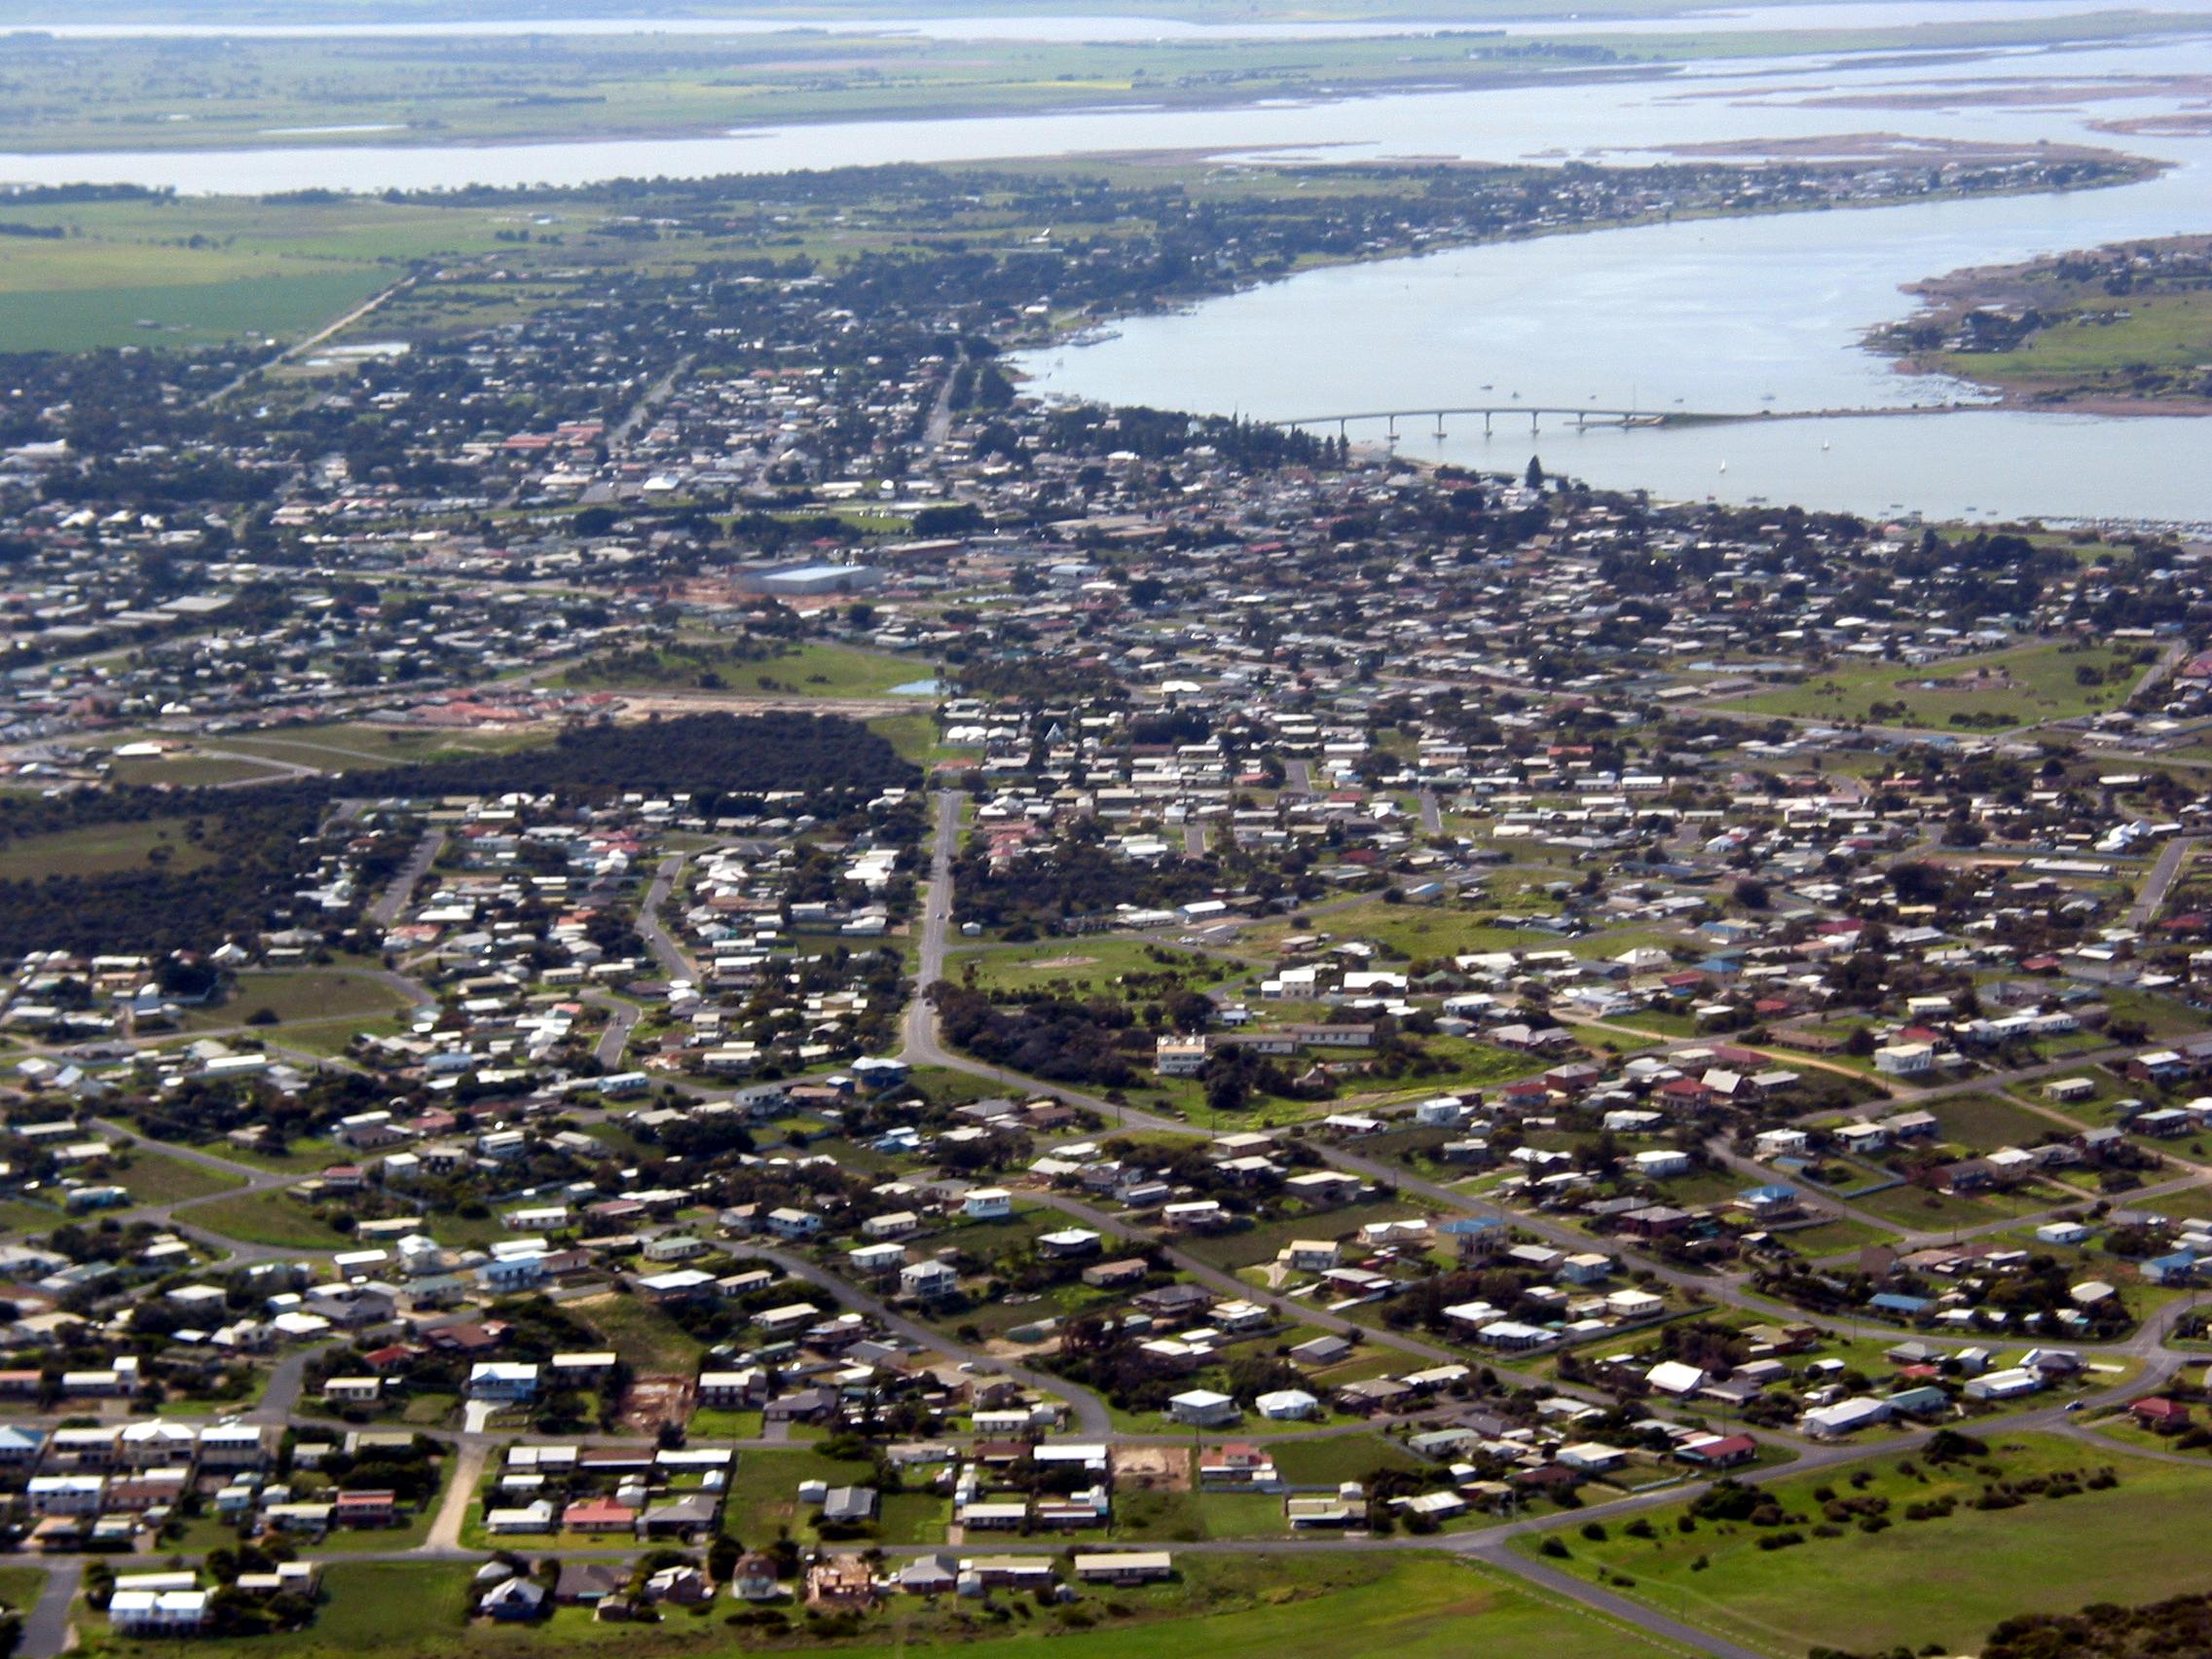 View of Goolwa township